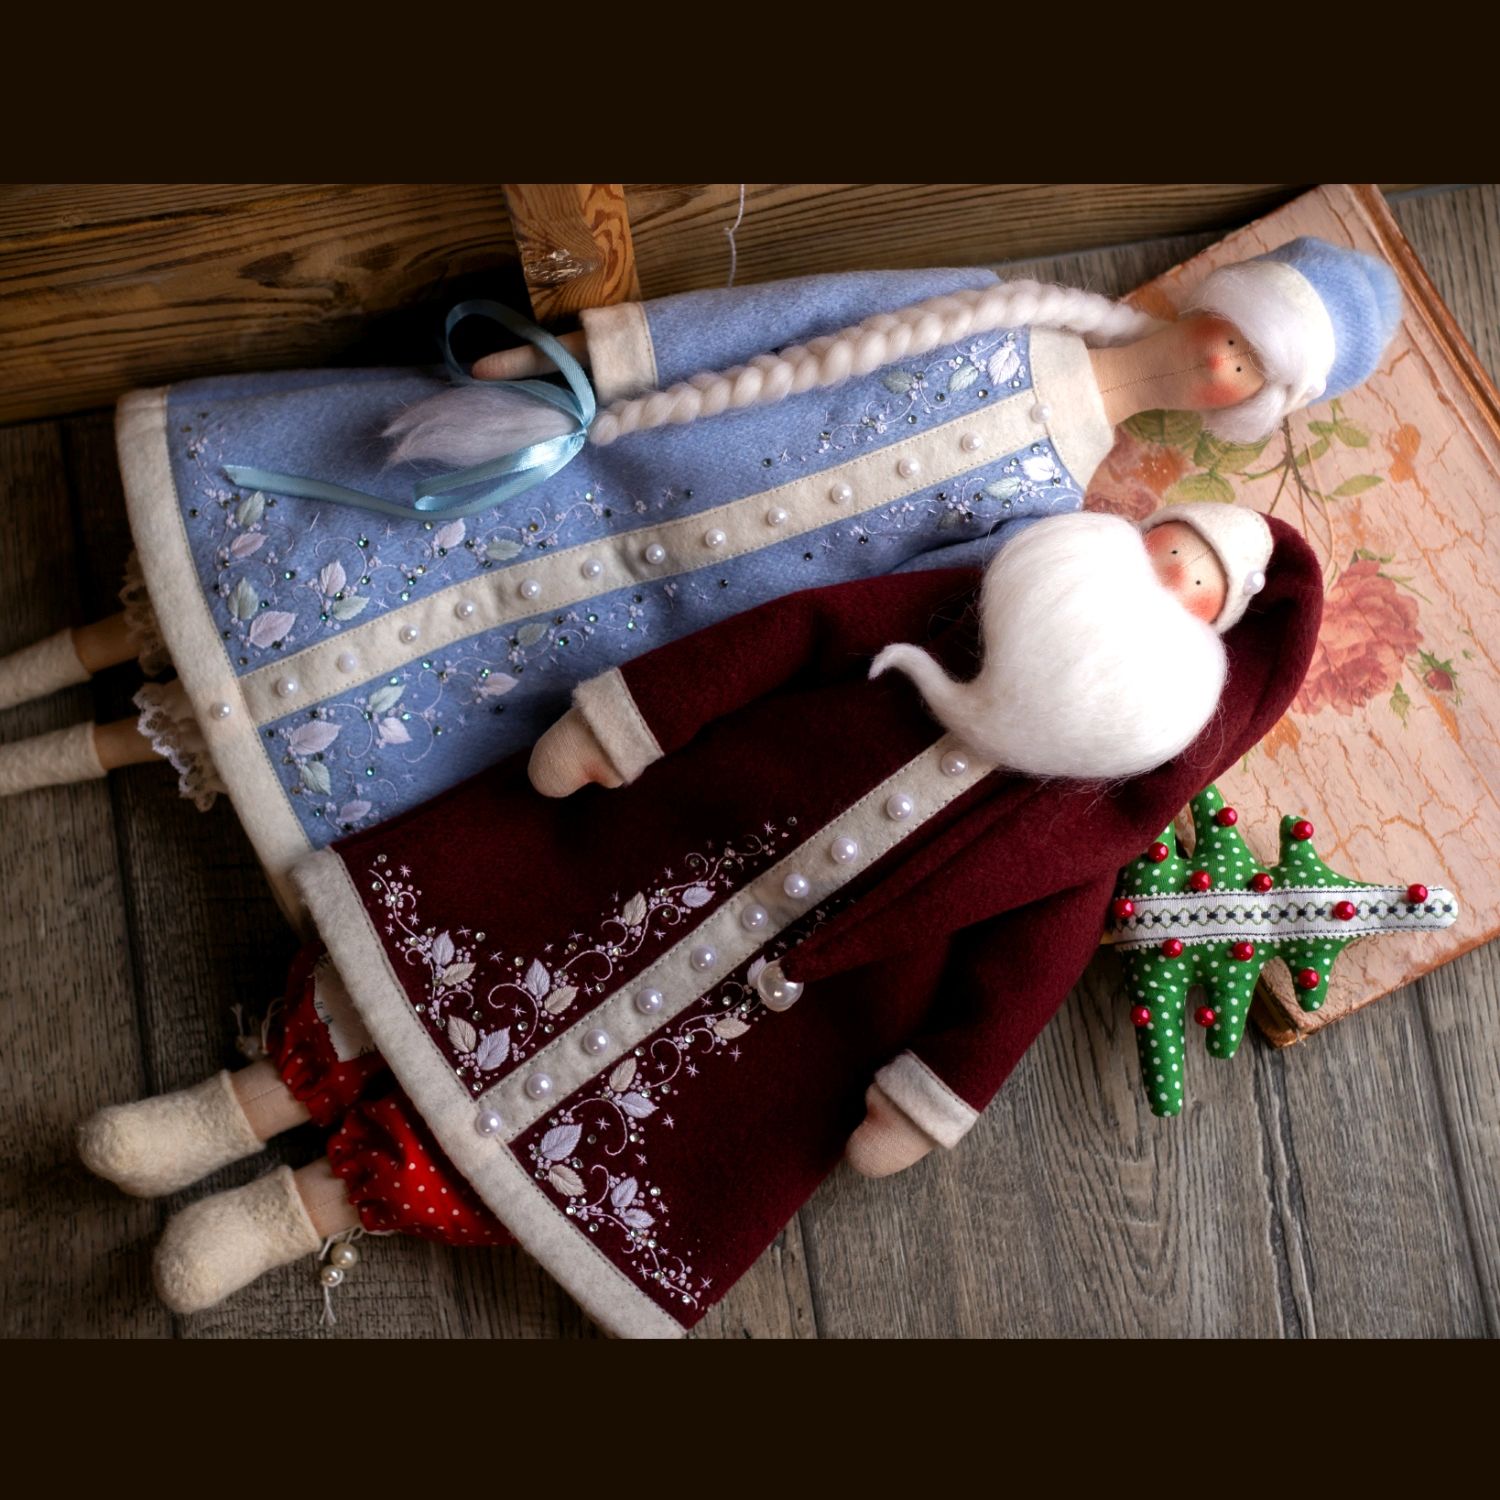 Кукла Тильда. Дед Мороз своими руками. Мастер-класс с пошаговыми фото